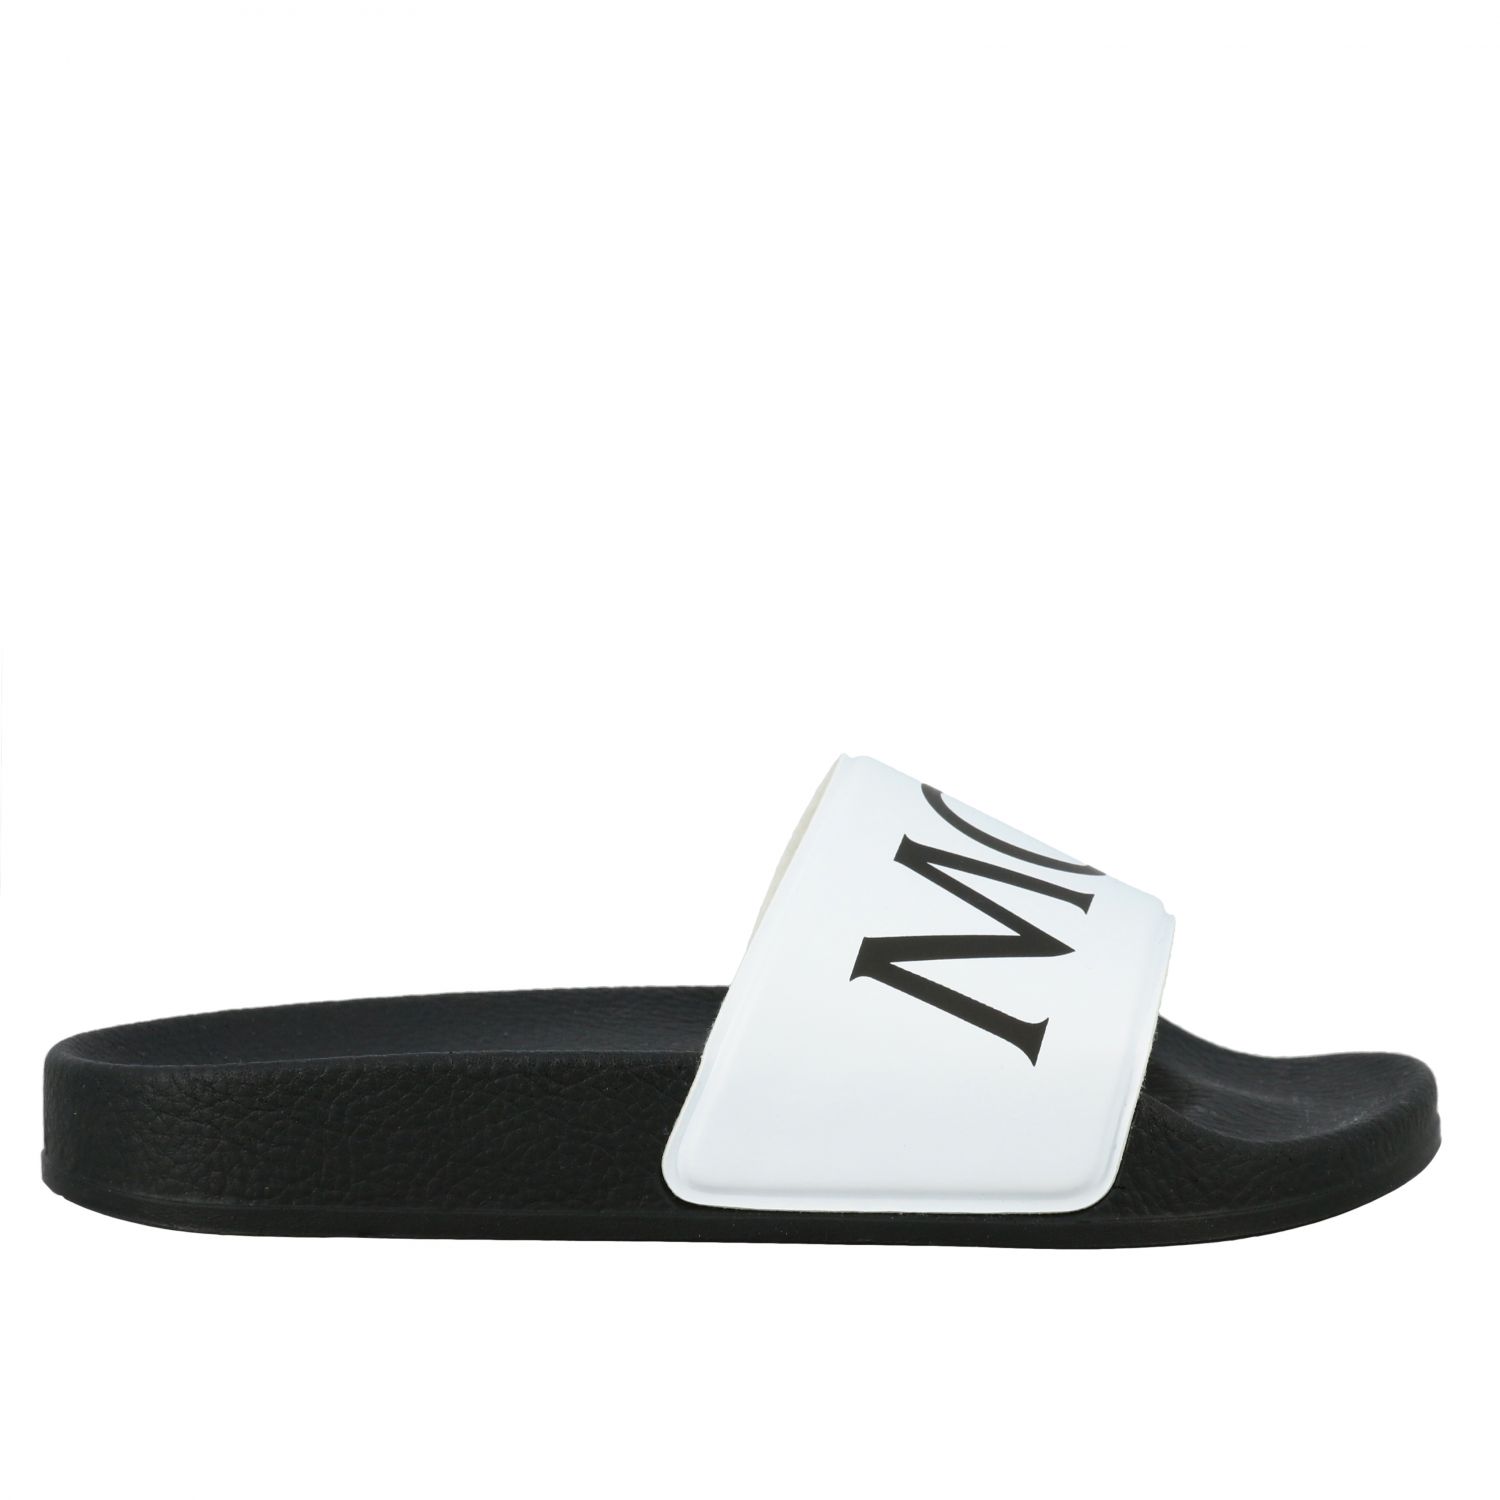 MONCLER: sandal with big logo - White | Moncler shoes F19544C70000 ...